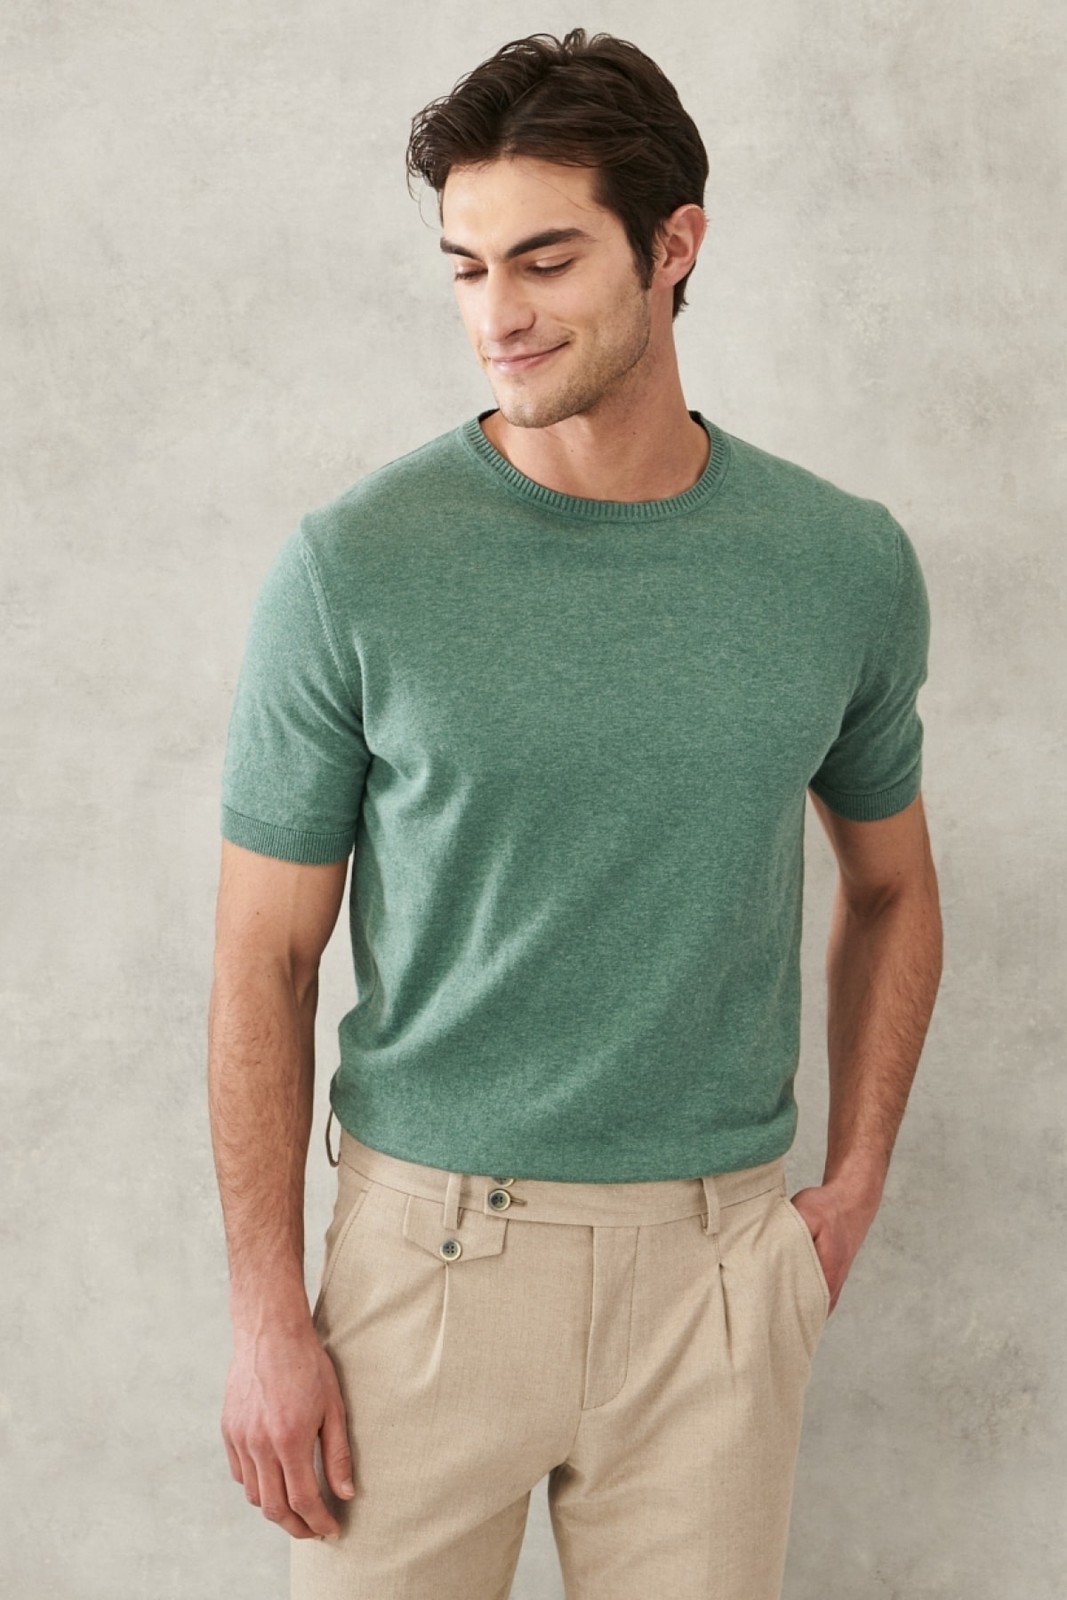 ALTINYILDIZ CLASSICS Men's Green Standard Fit Crew Neck 100% Cotton Knitwear T-Shirt